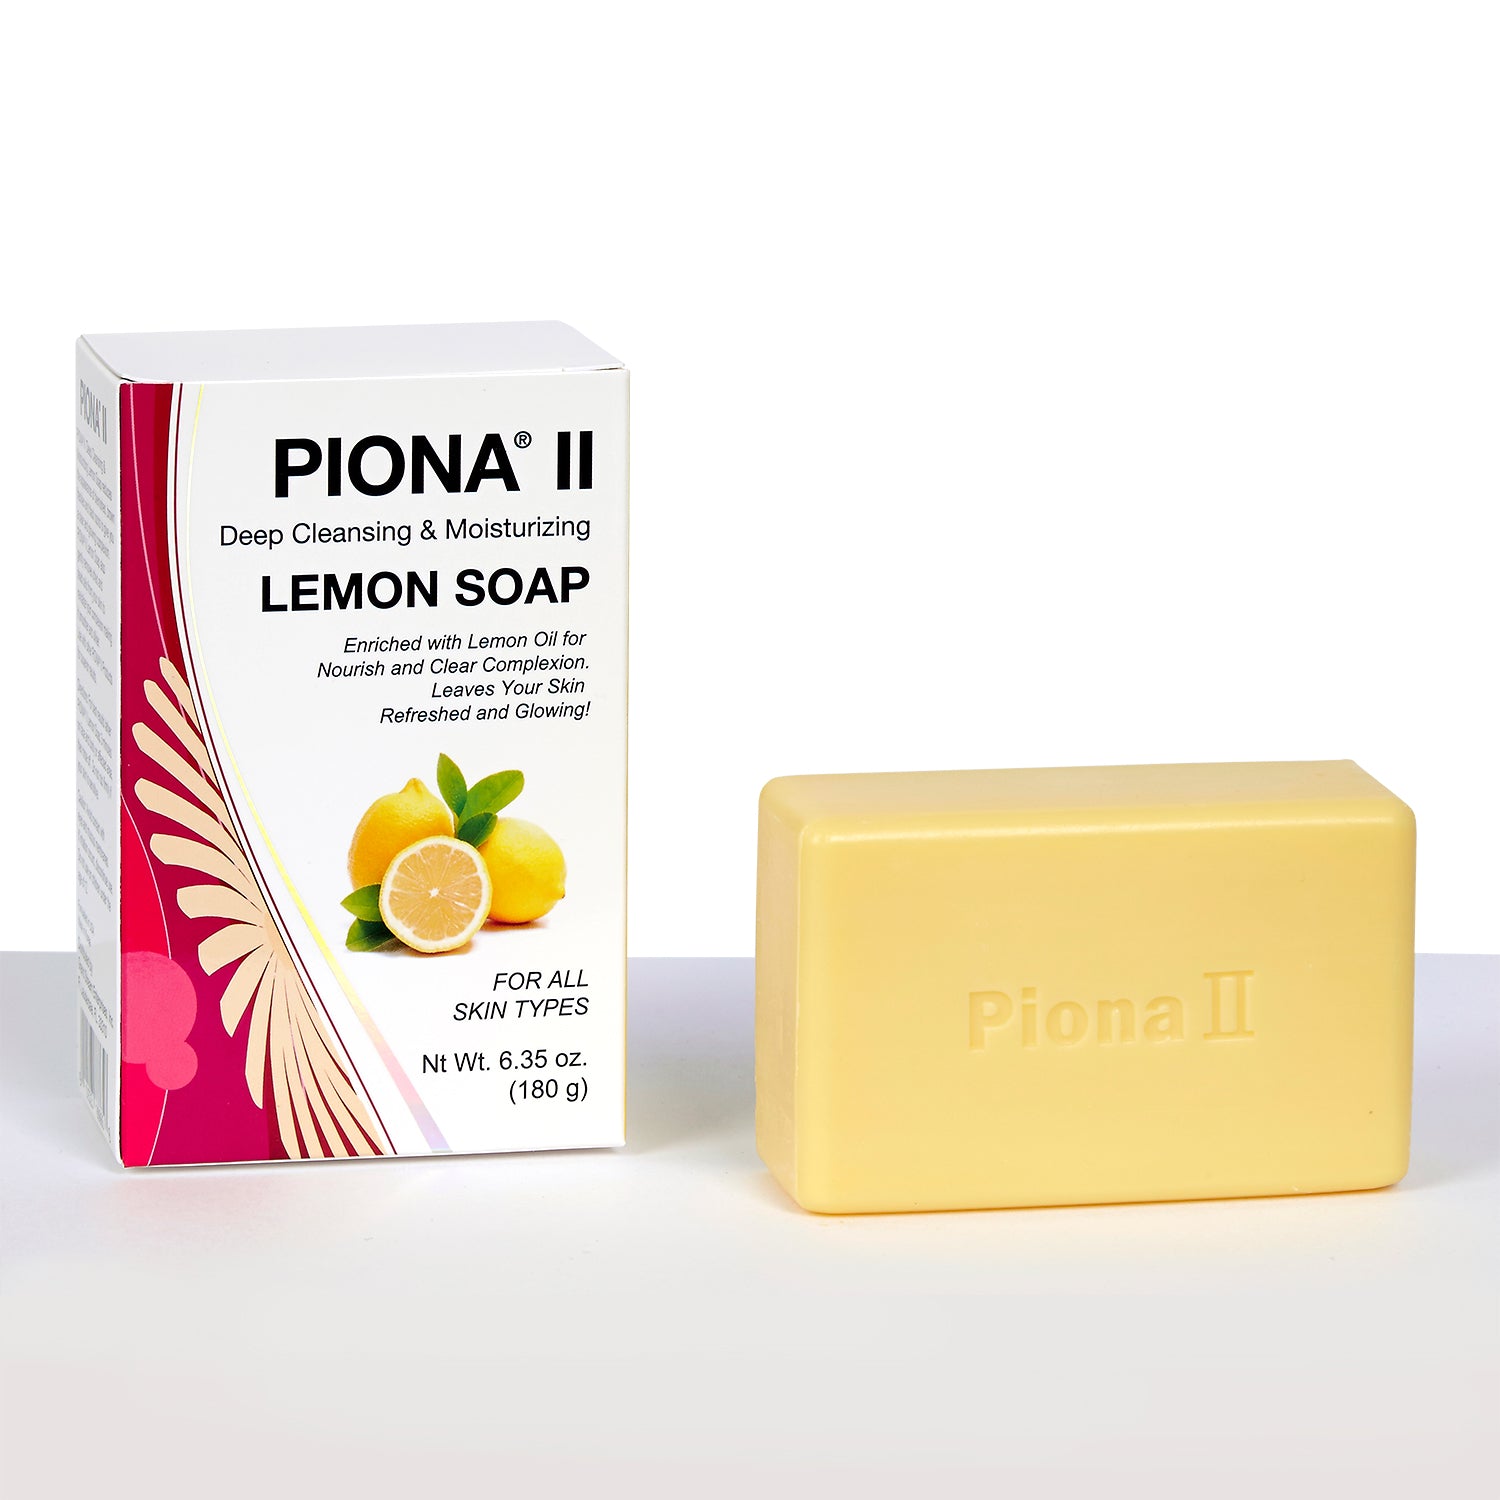 Piona II Deep Cleansing & Moisturizing Lemon Soap 6.35